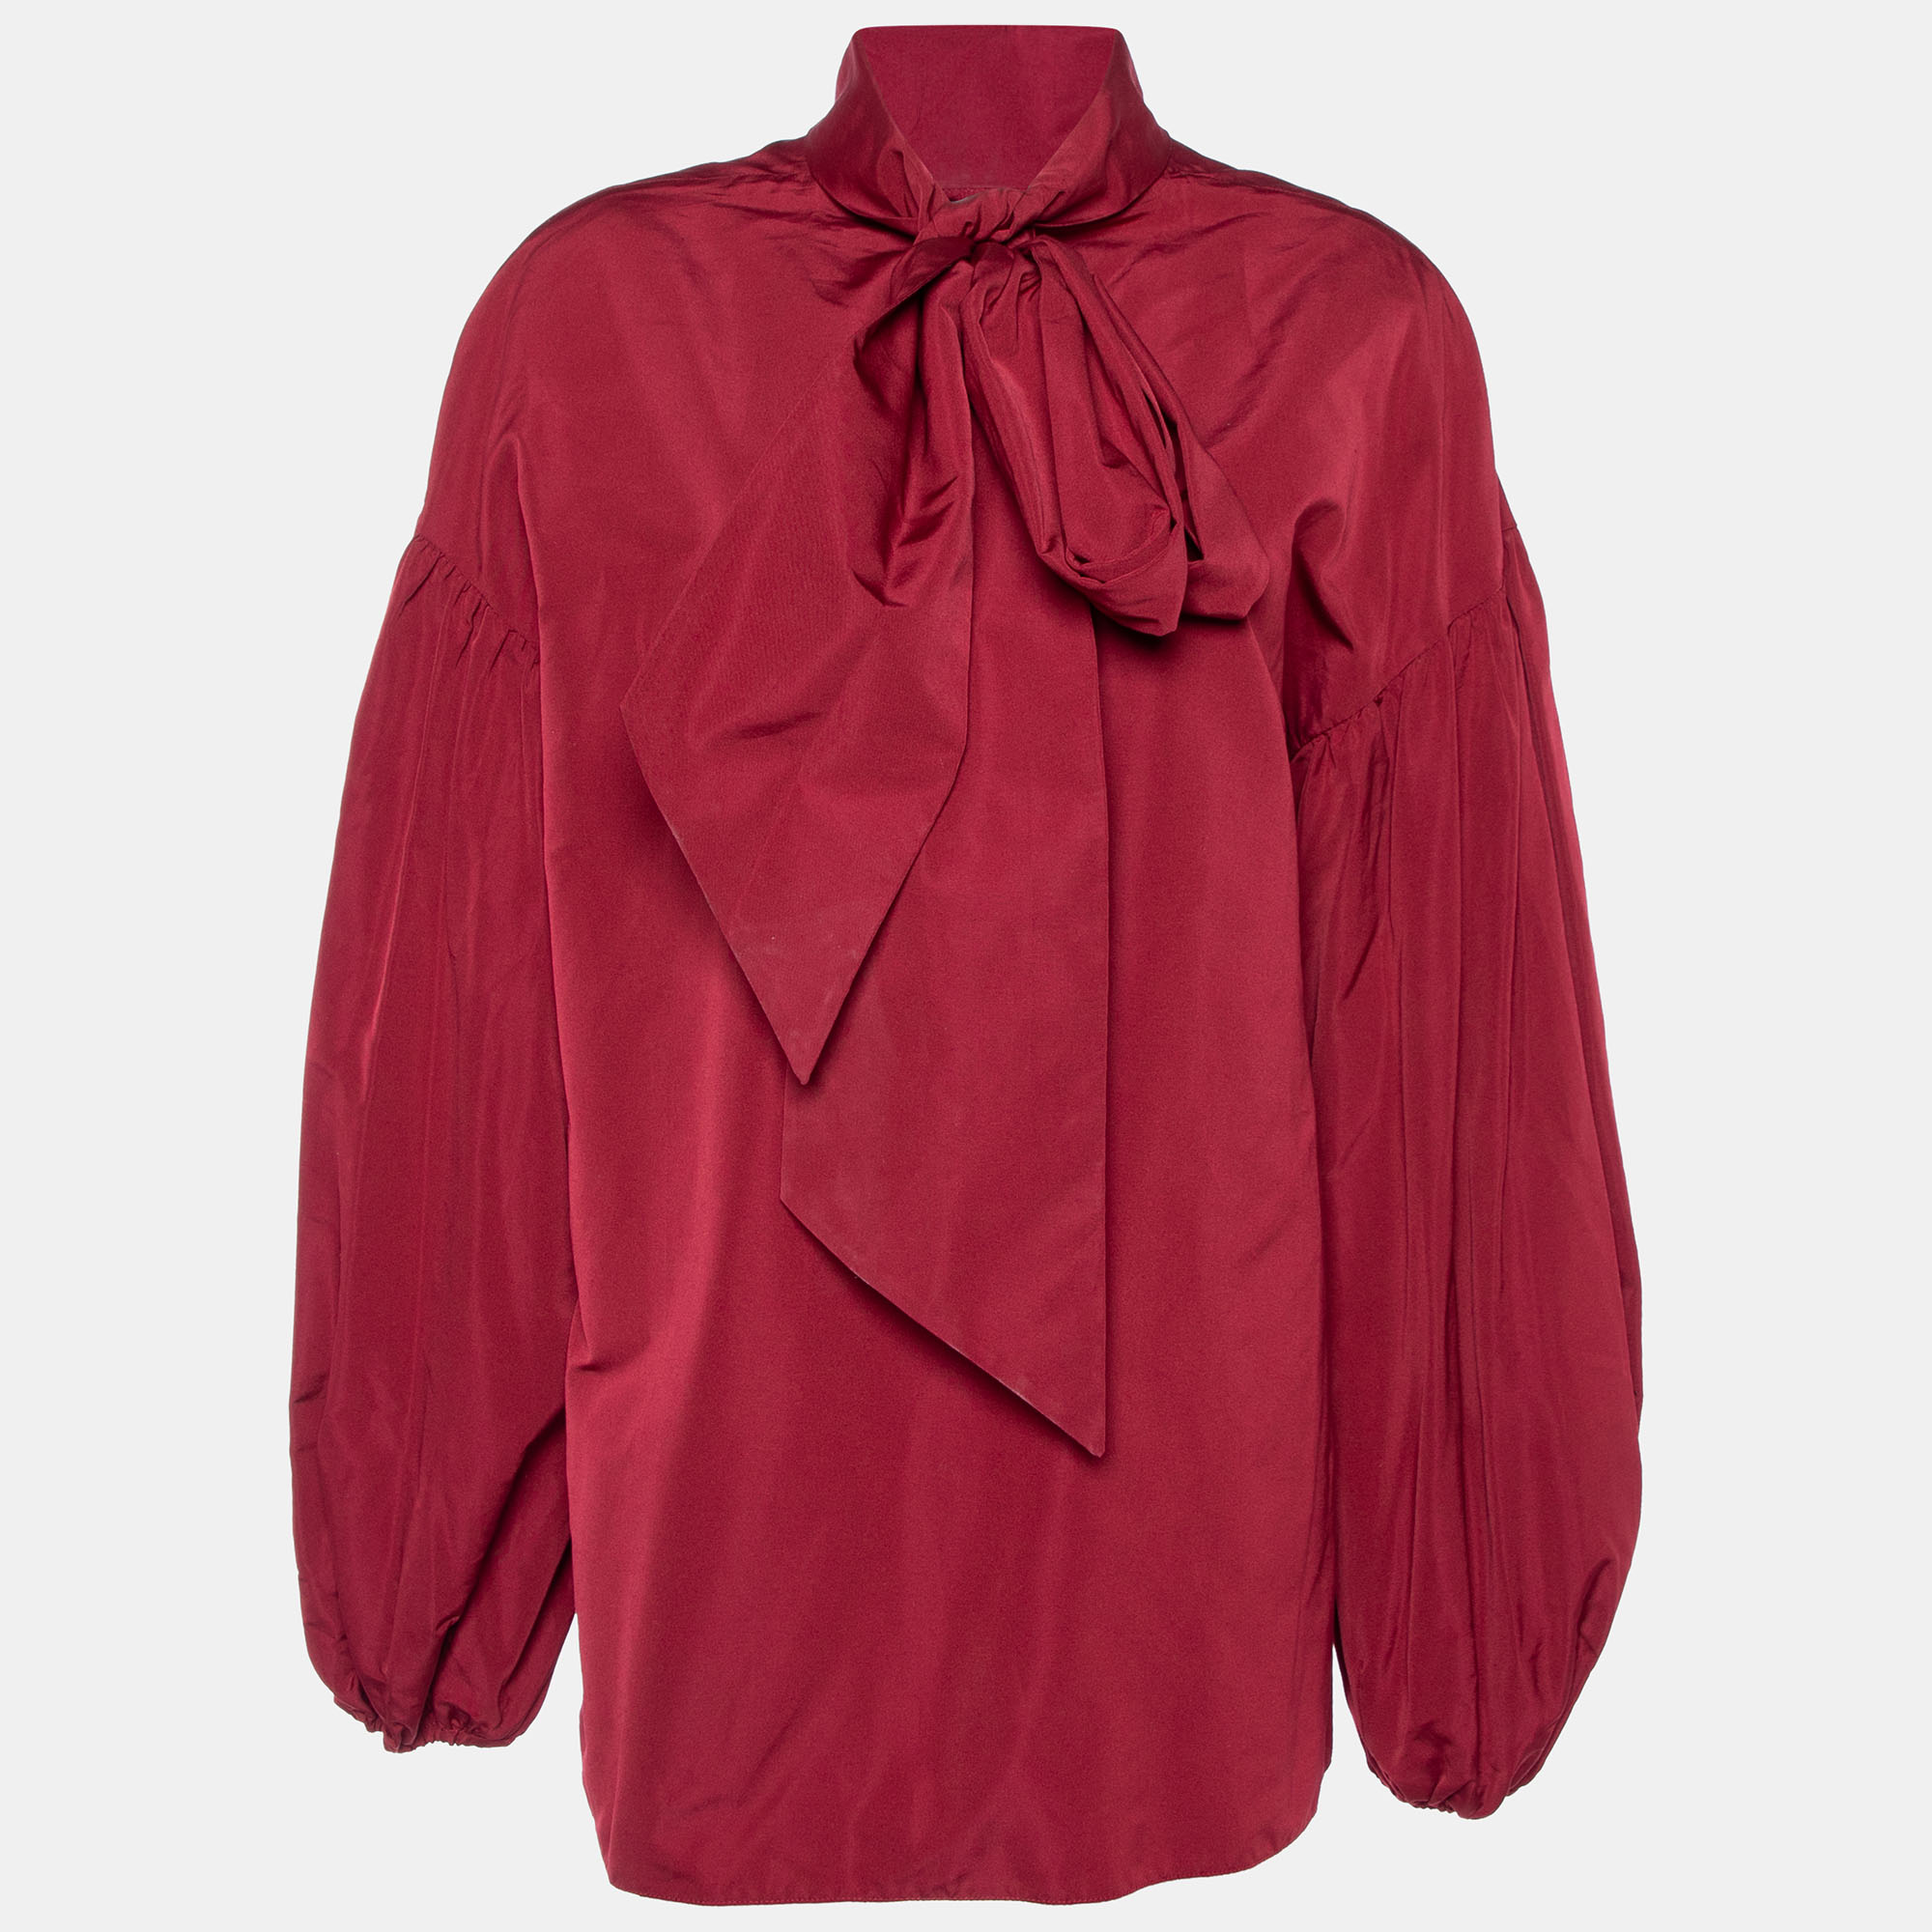 Valentino burgundy cotton taffeta neck tie detail top l